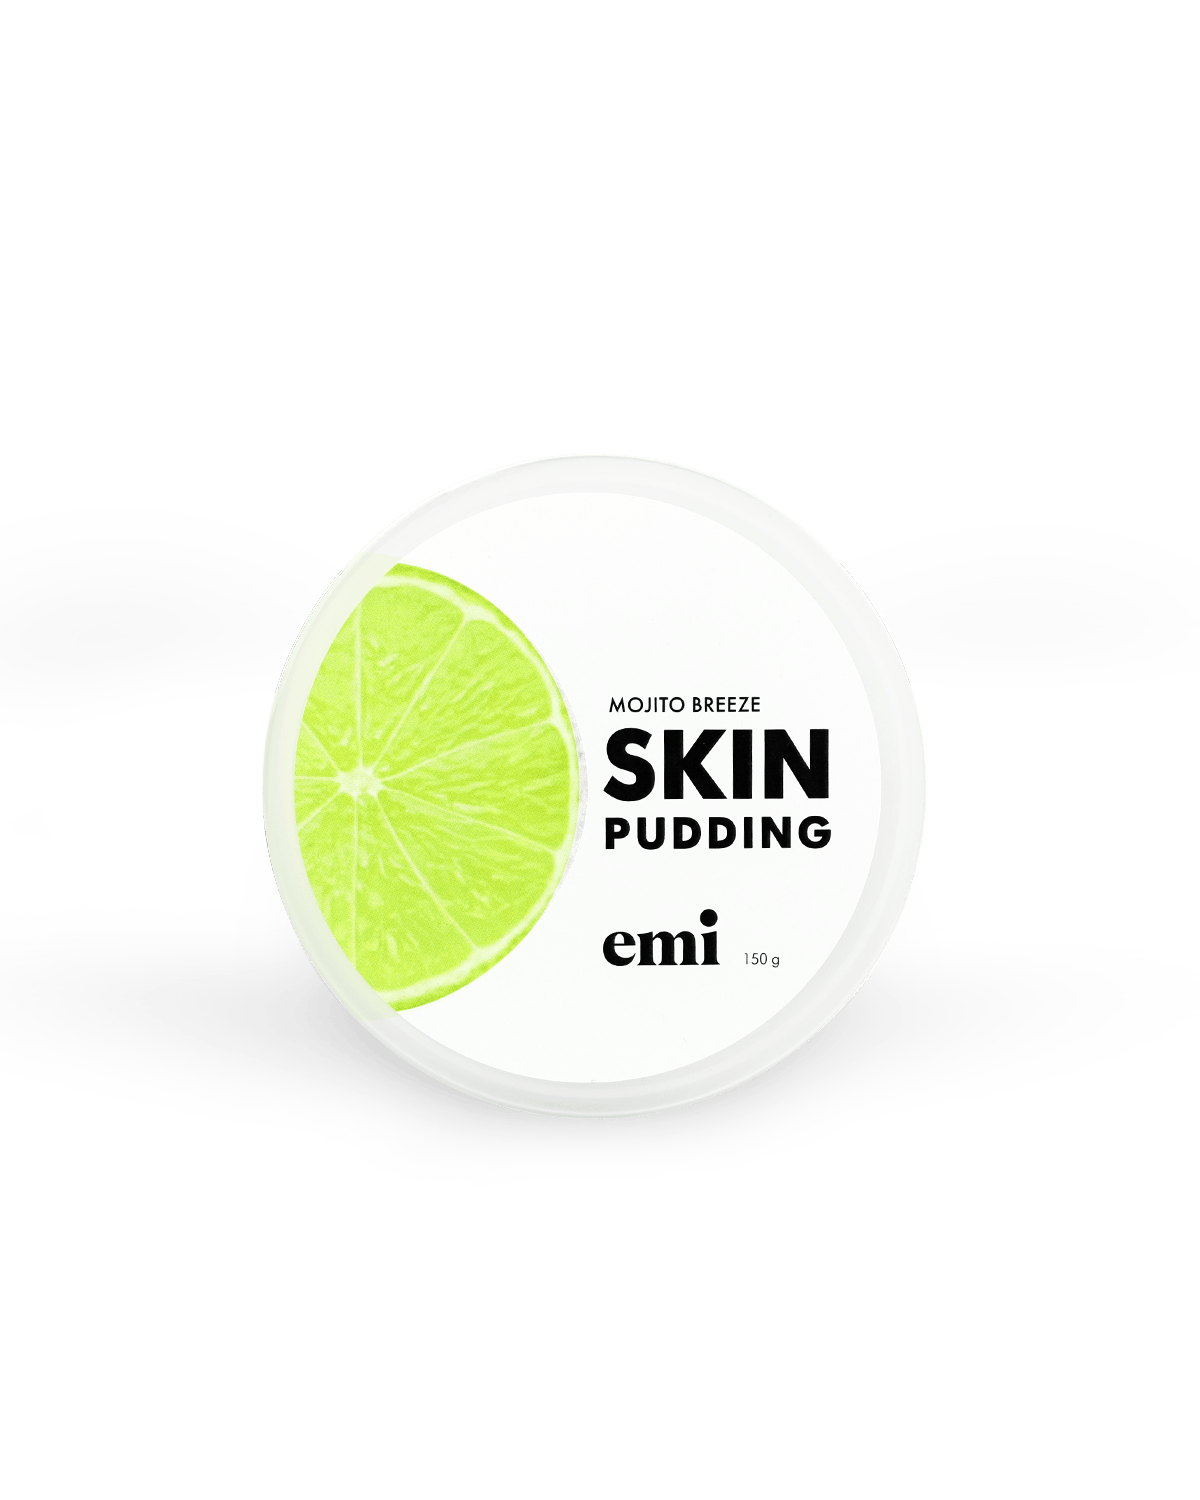 EMI Skin Pudding Mojito Breeze, 150 g. - Retail Options!